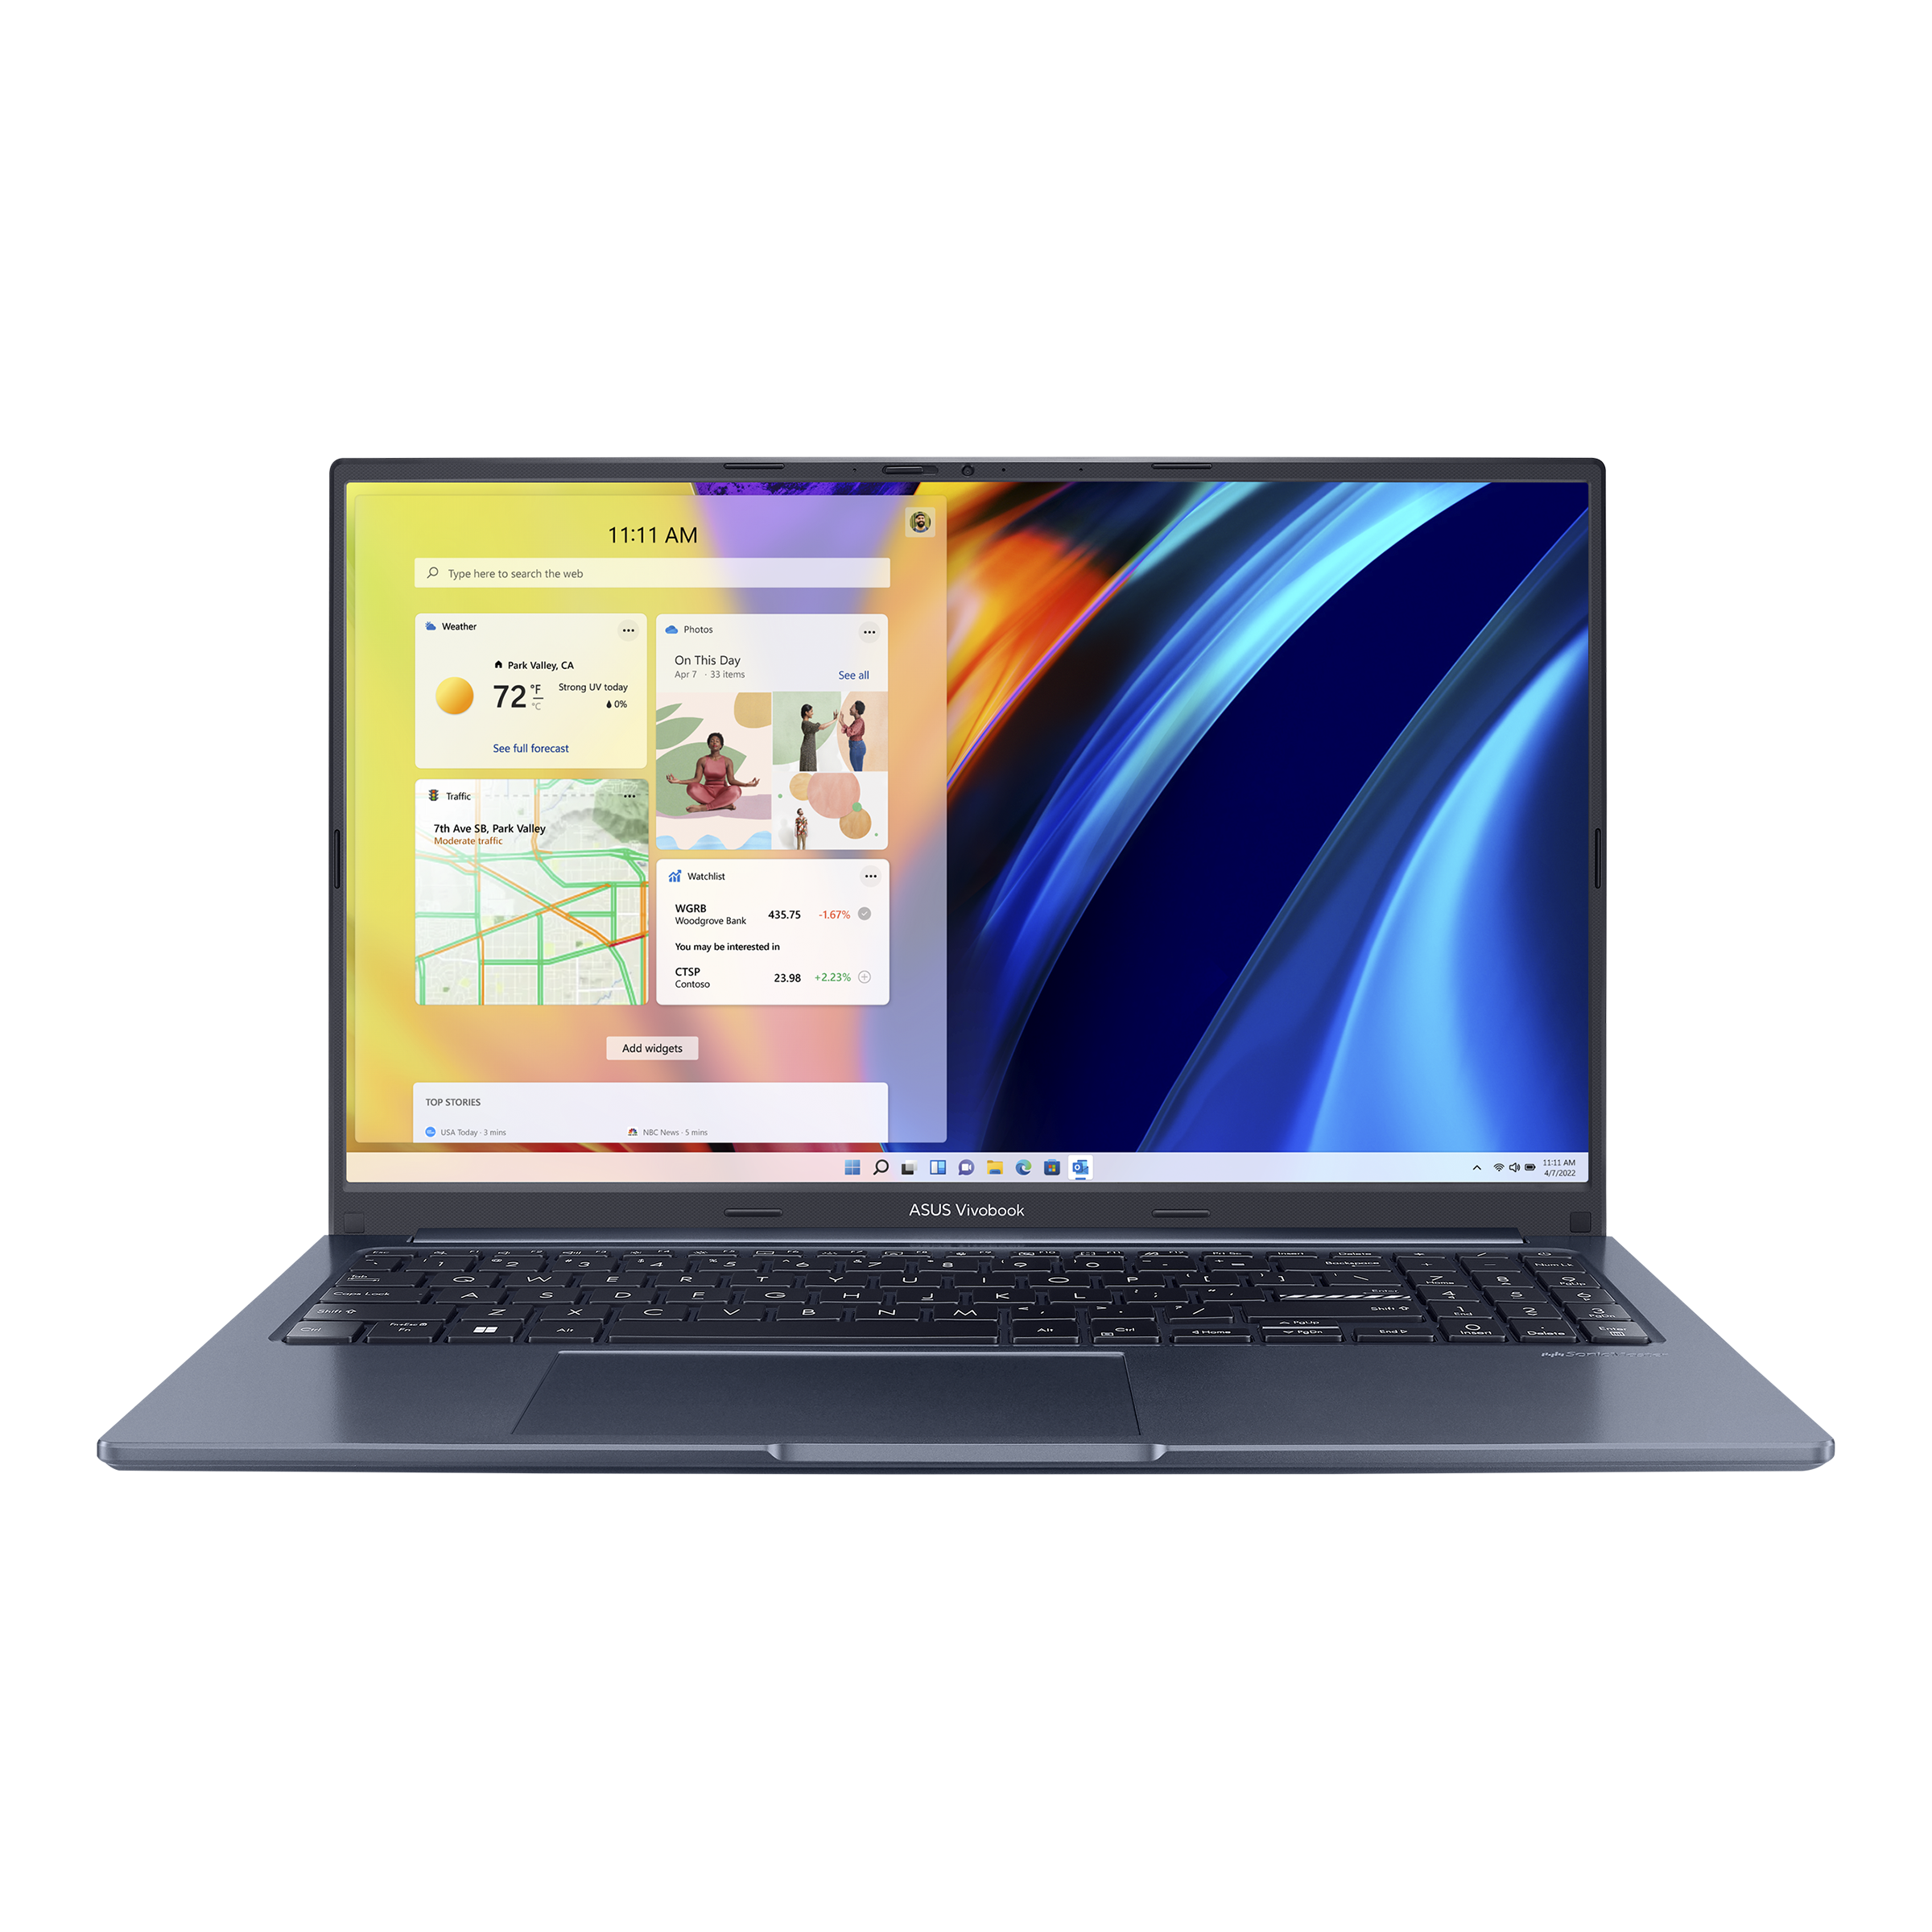 Vivobook 15X OLED (X1503, 12th Gen Intel) | VivoBook | ノート ...